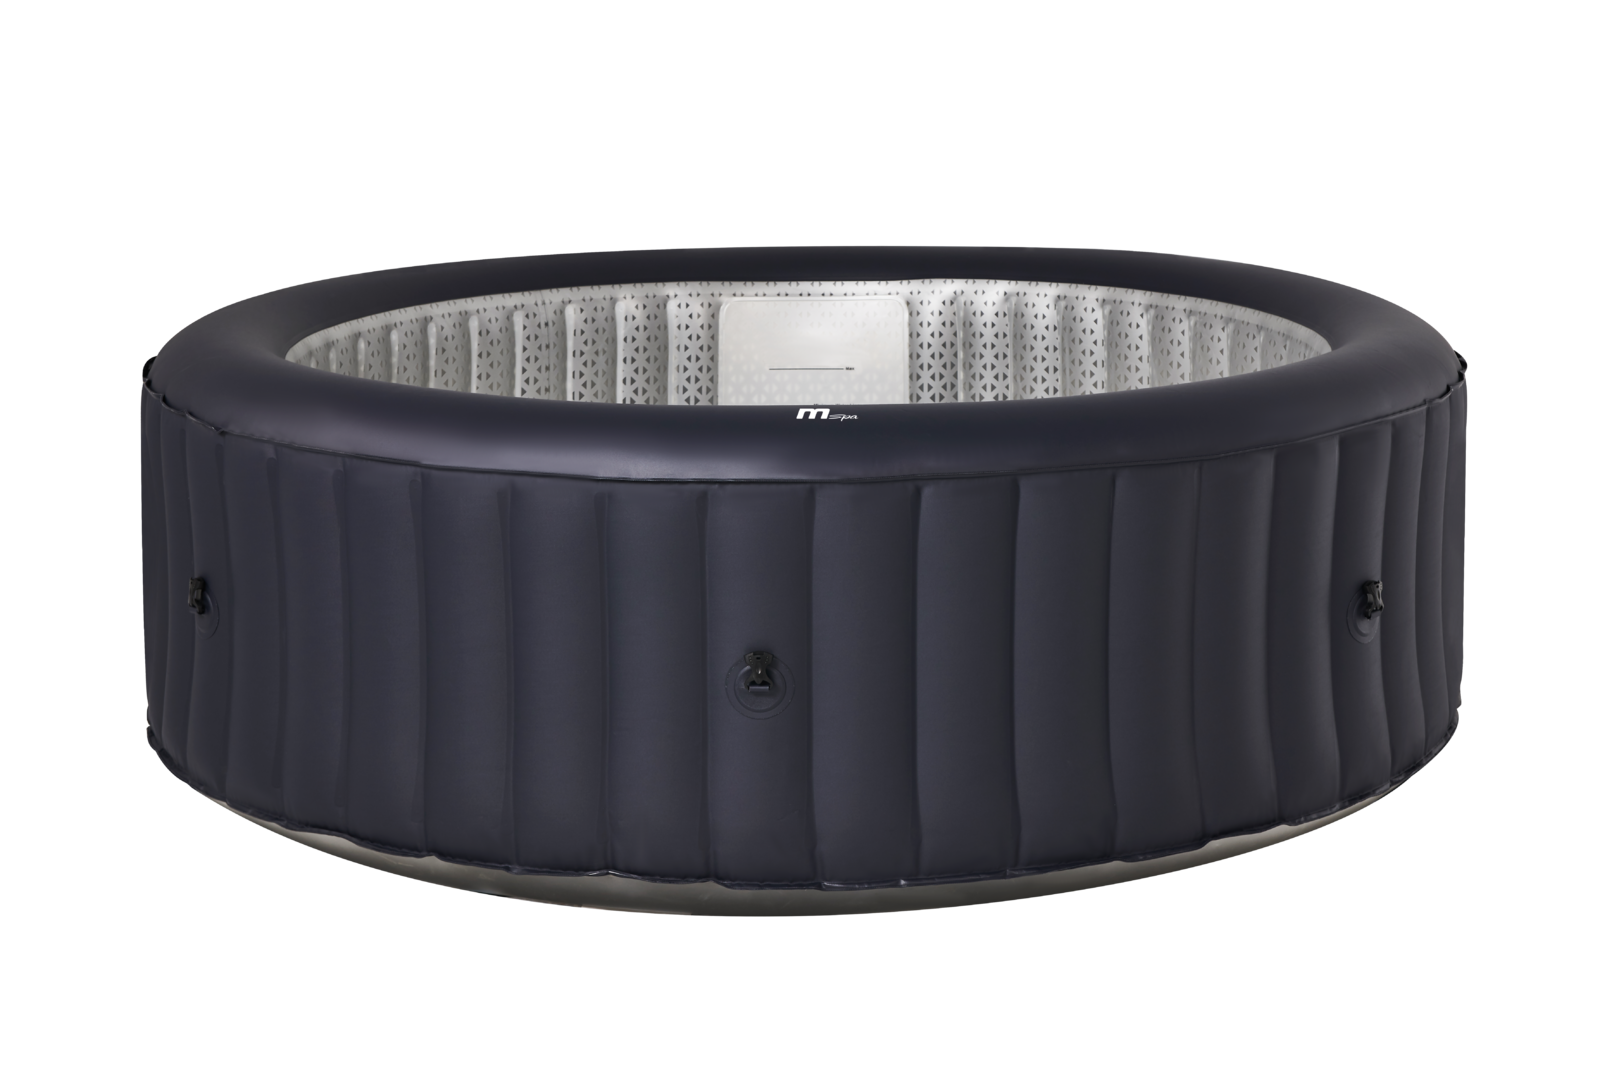 Versatile Luxury: MSPA Aurora Inflatable Hot Tub for 2-6 Person